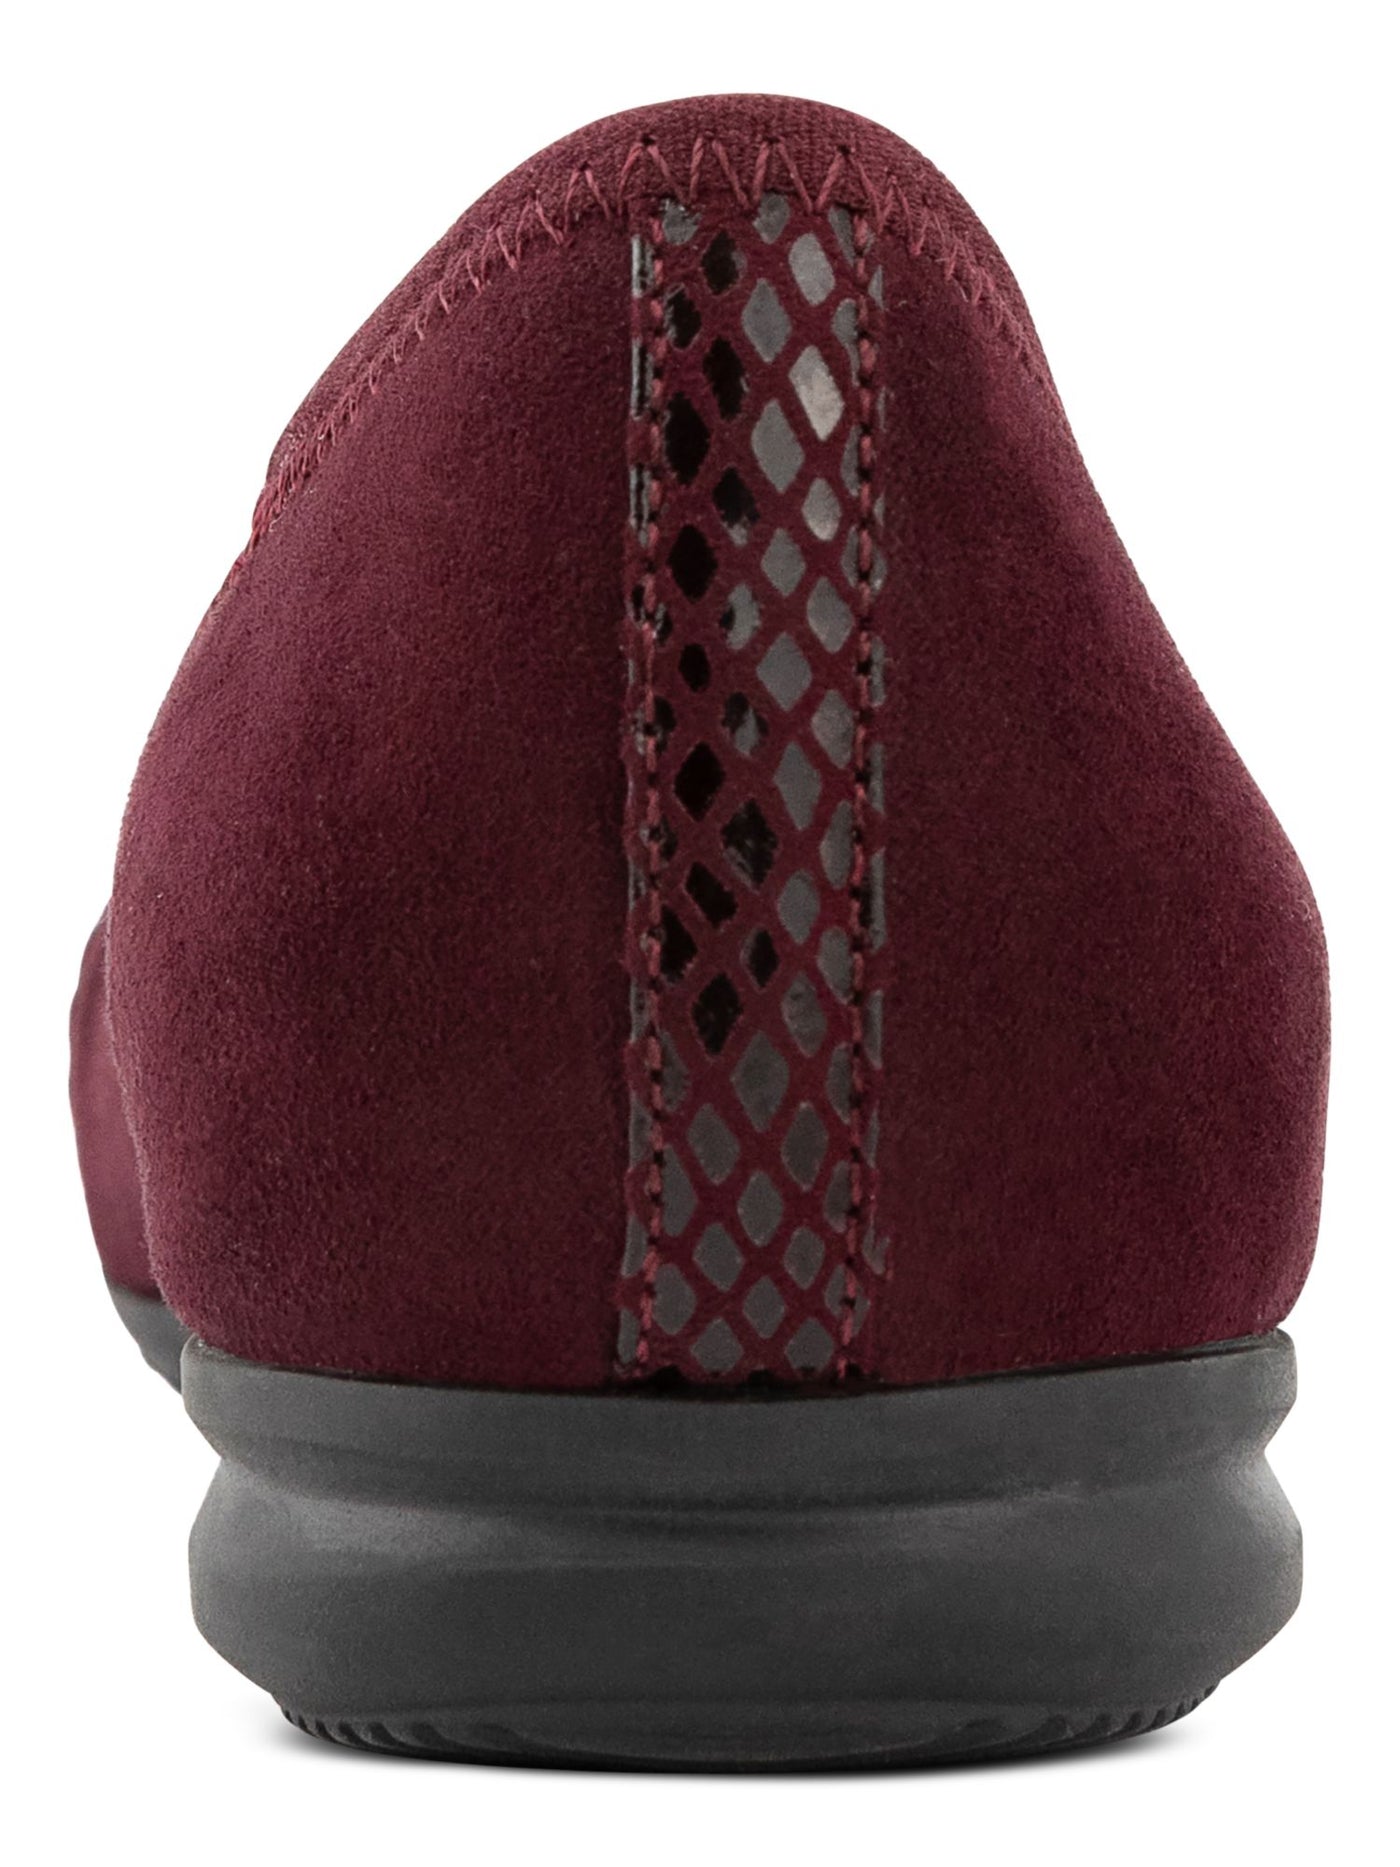 KAREN SCOTT Womens Burgundy Cushioned Tashelle Round Toe Slip On Flats Shoes 5.5 M